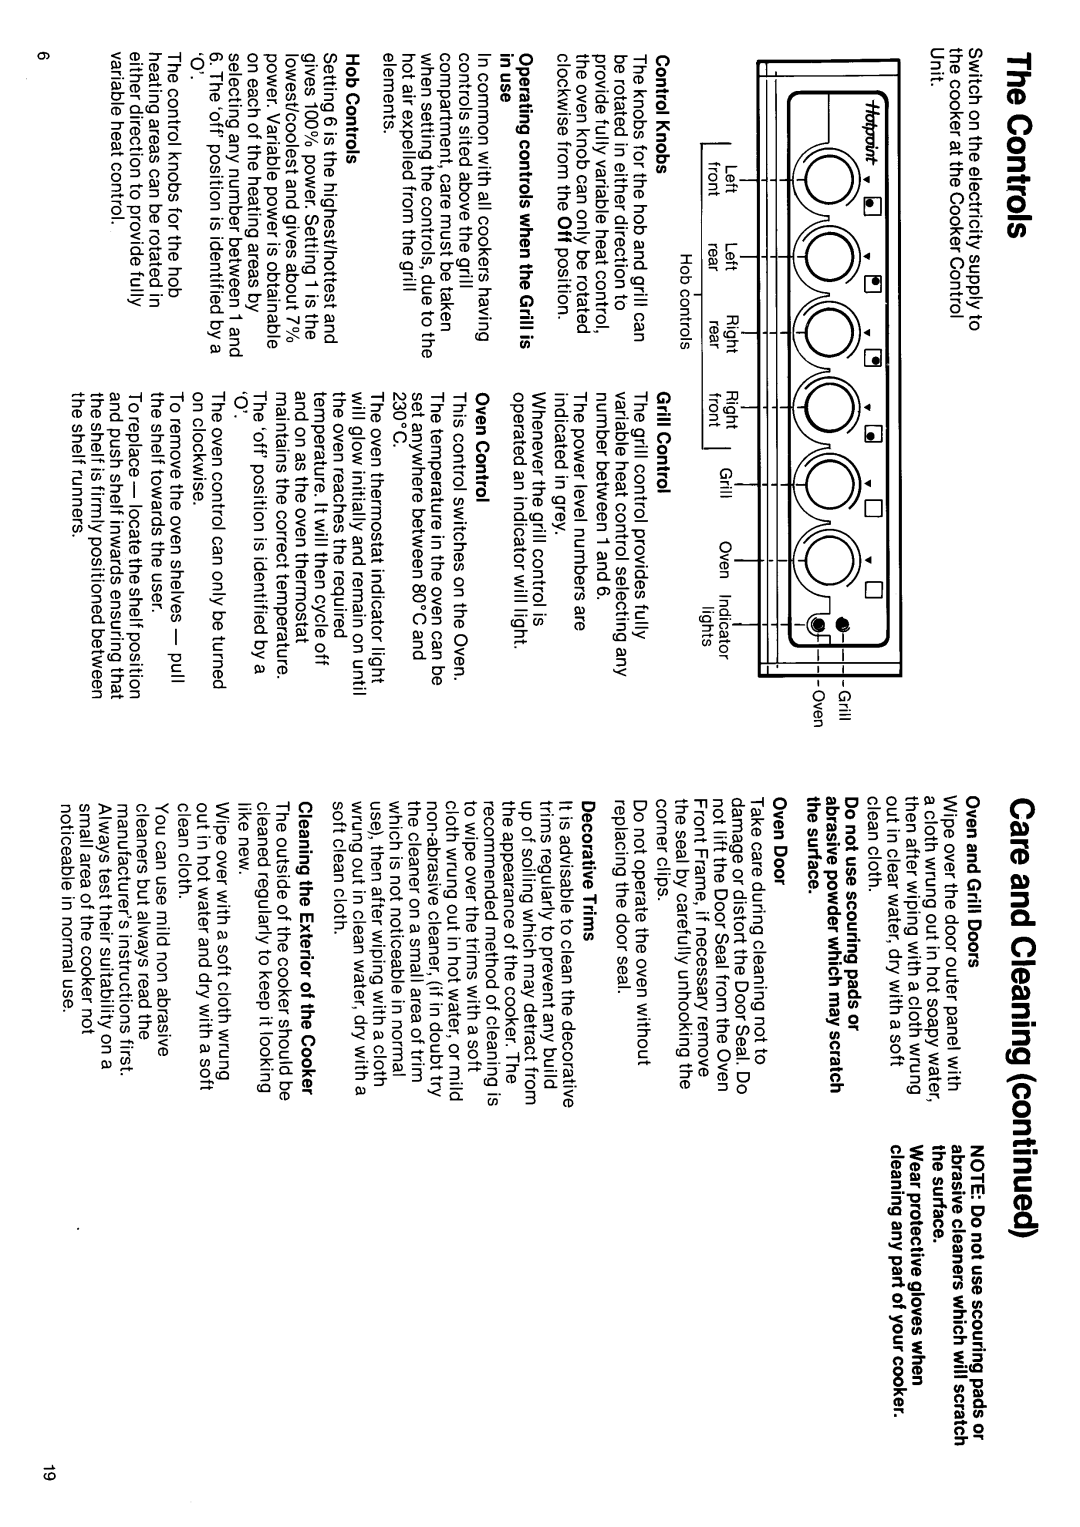 Hotpoint 6500 manual 